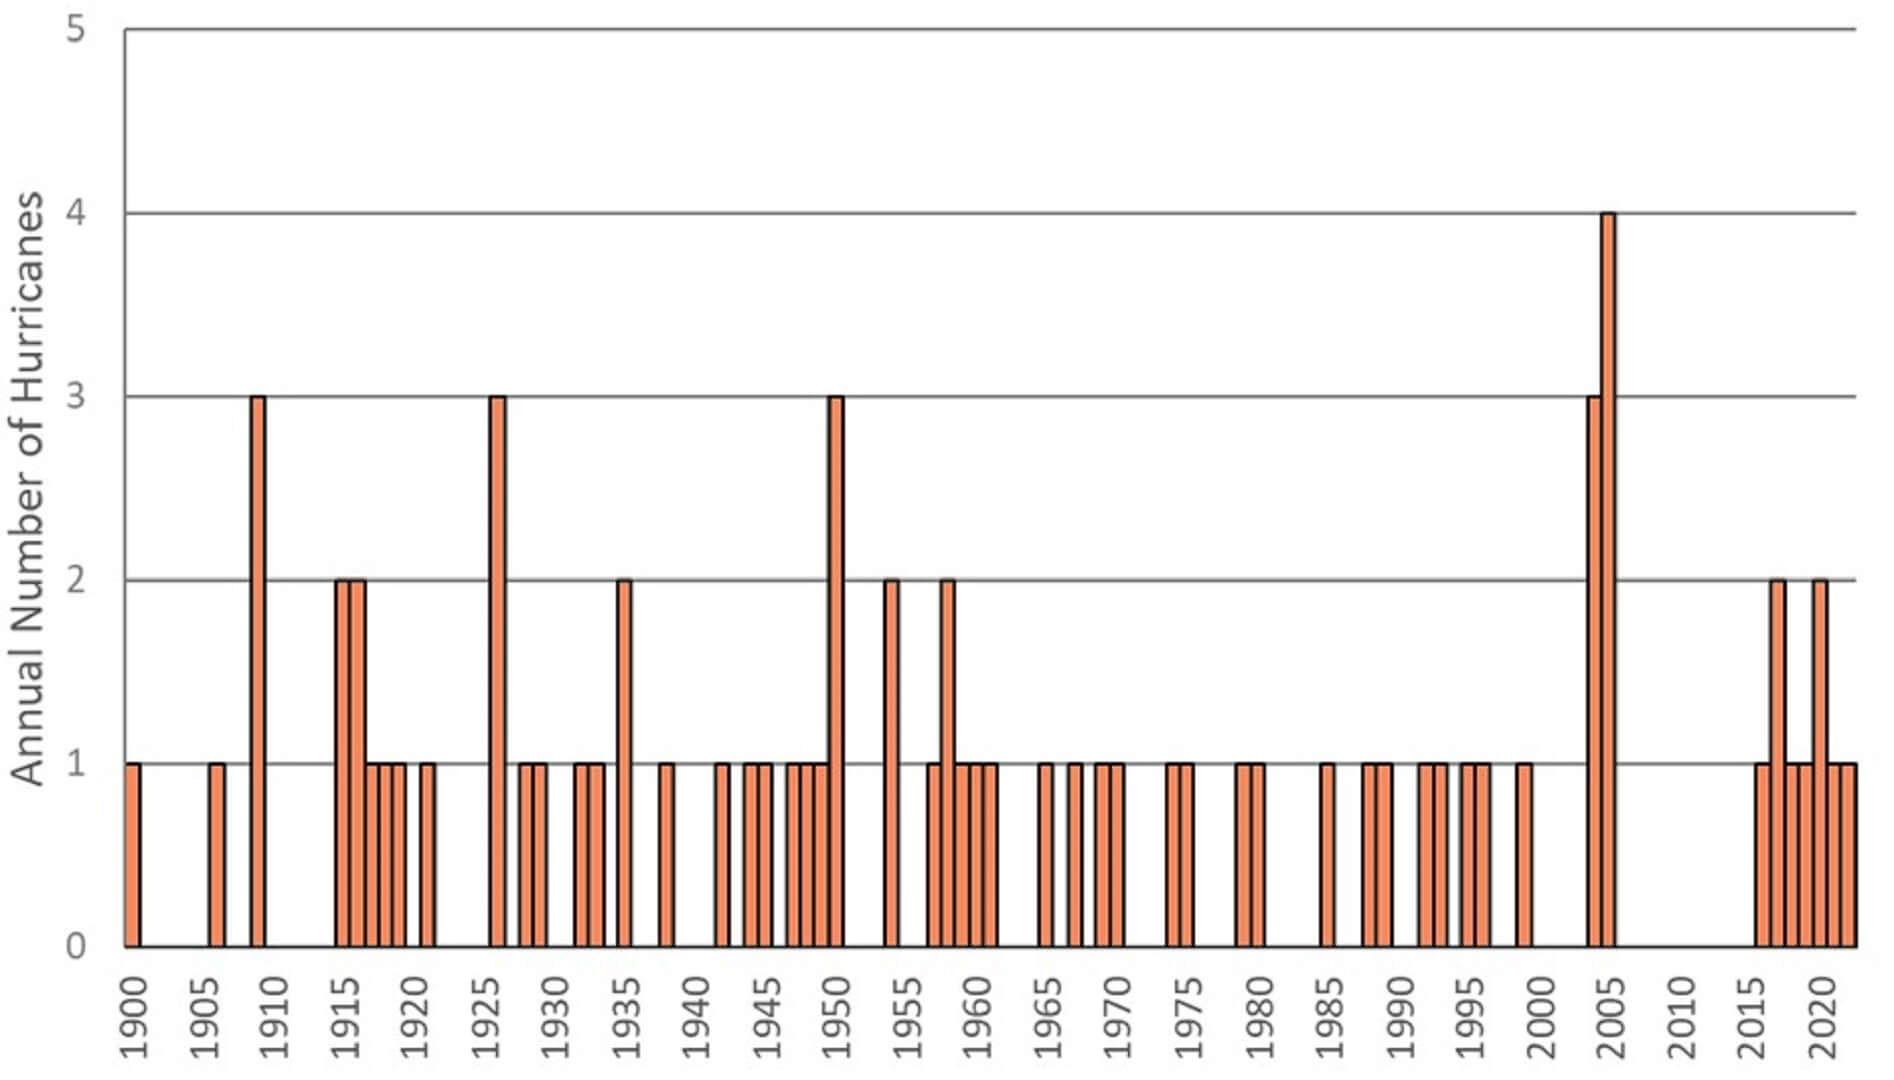 U.S. hurricane landfall activity, 1900-2022